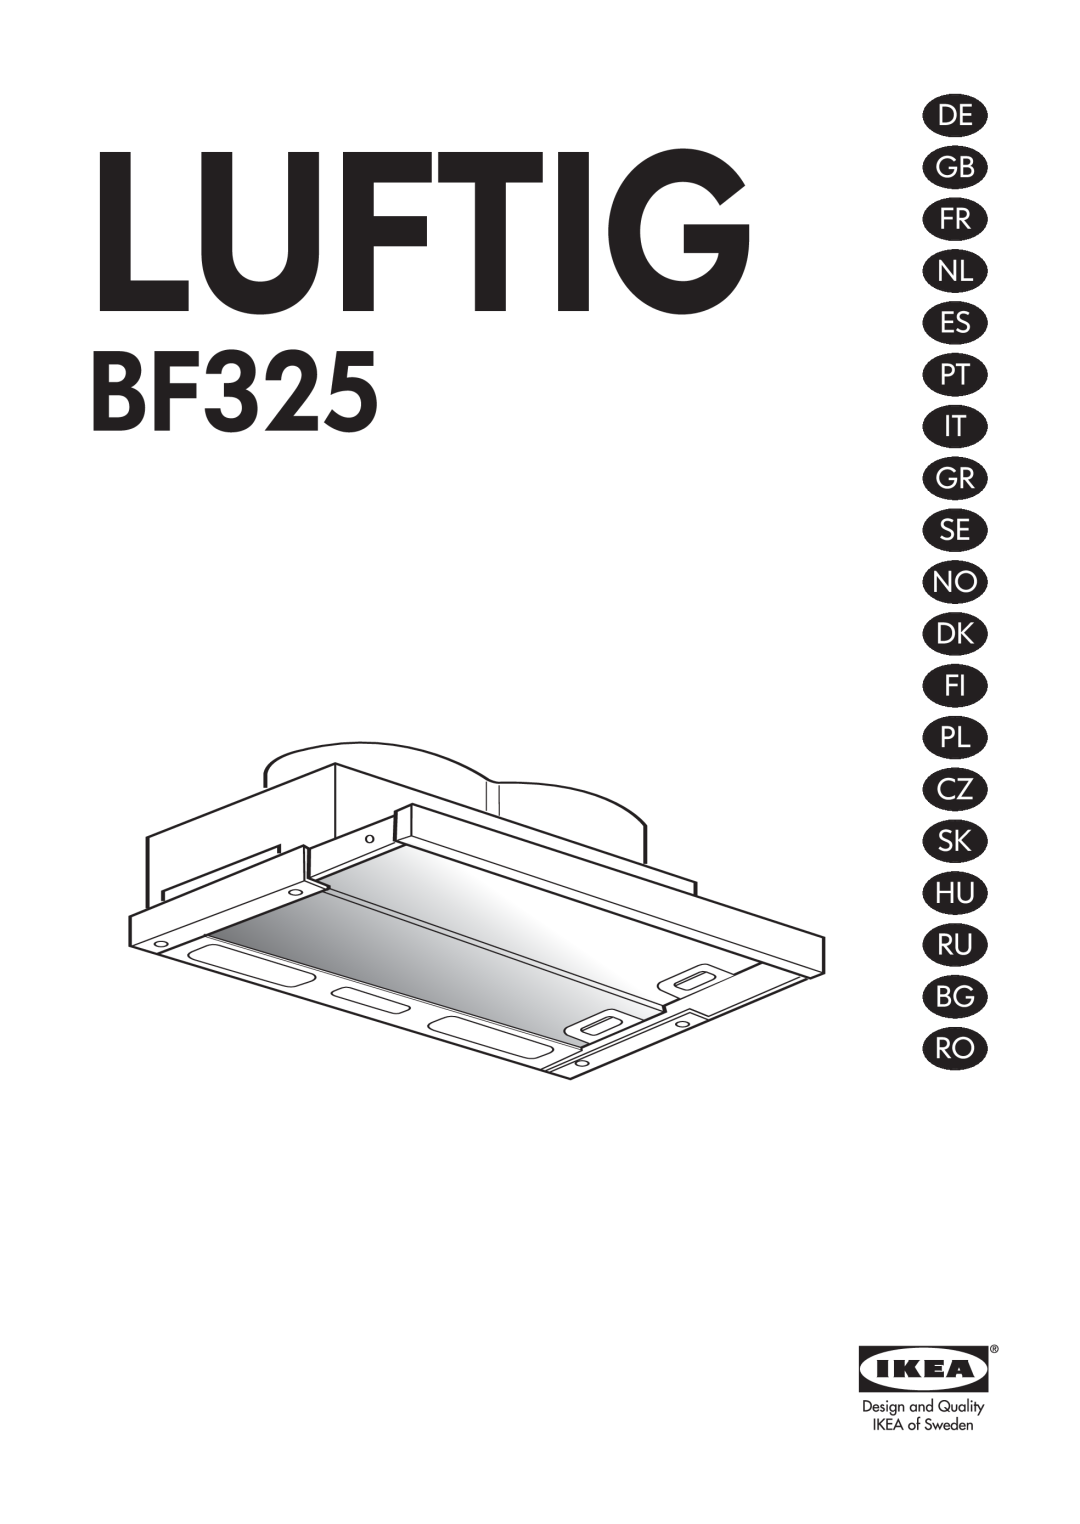 IKEA BF325 manual Luftig, De Gb Fr Nl Es Pt It Gr Se No Dk Fi Pl Cz Sk Hu, Ru Bg Ro 